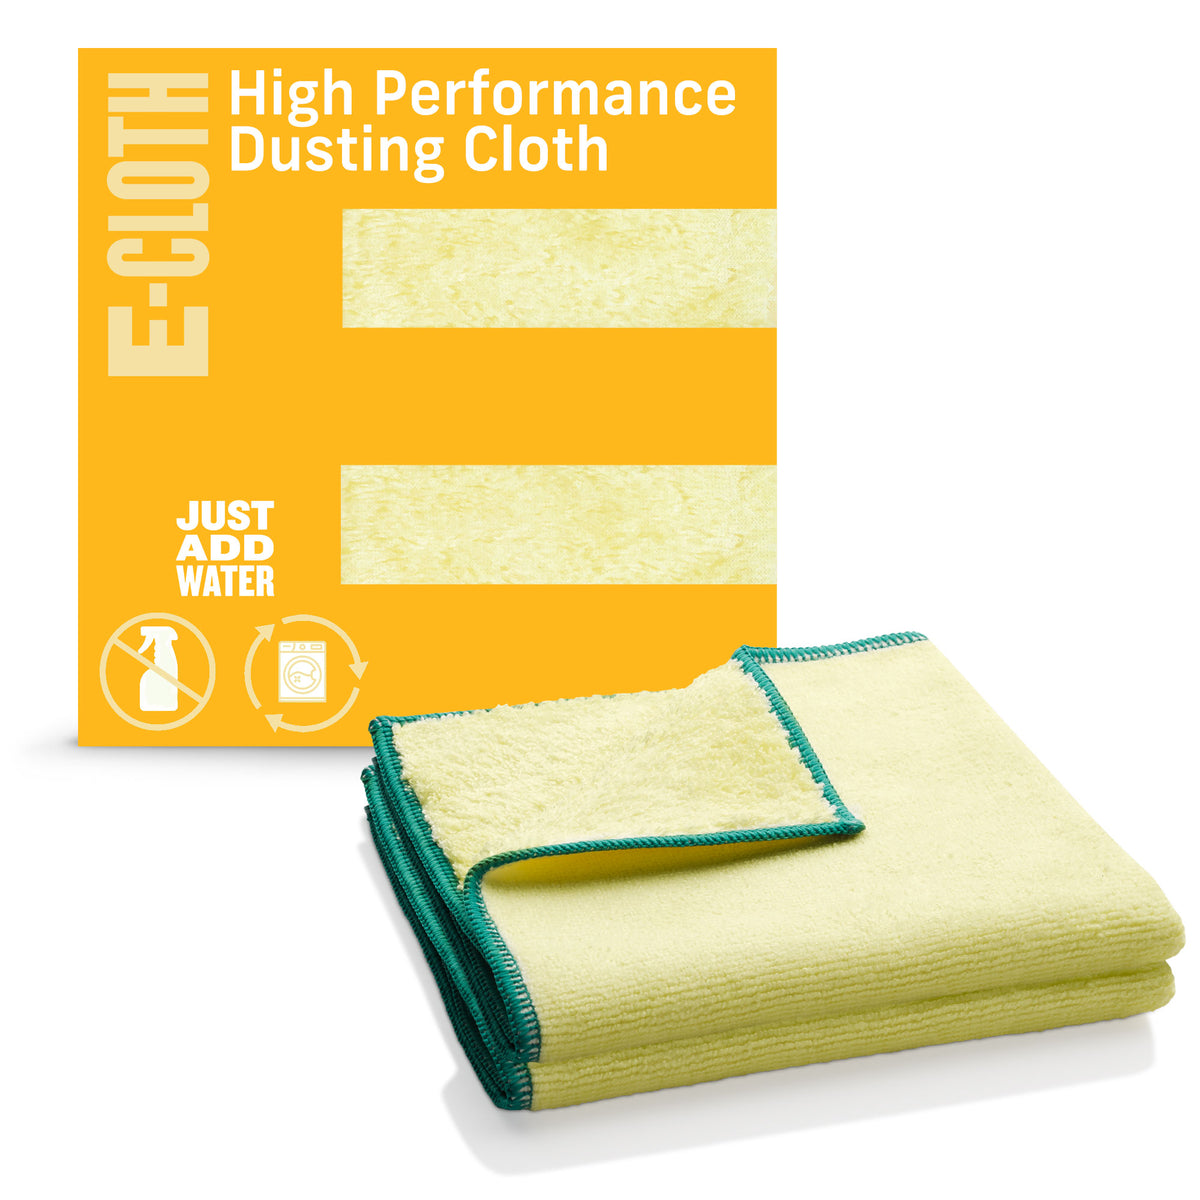 High Performance Dusting Cloth